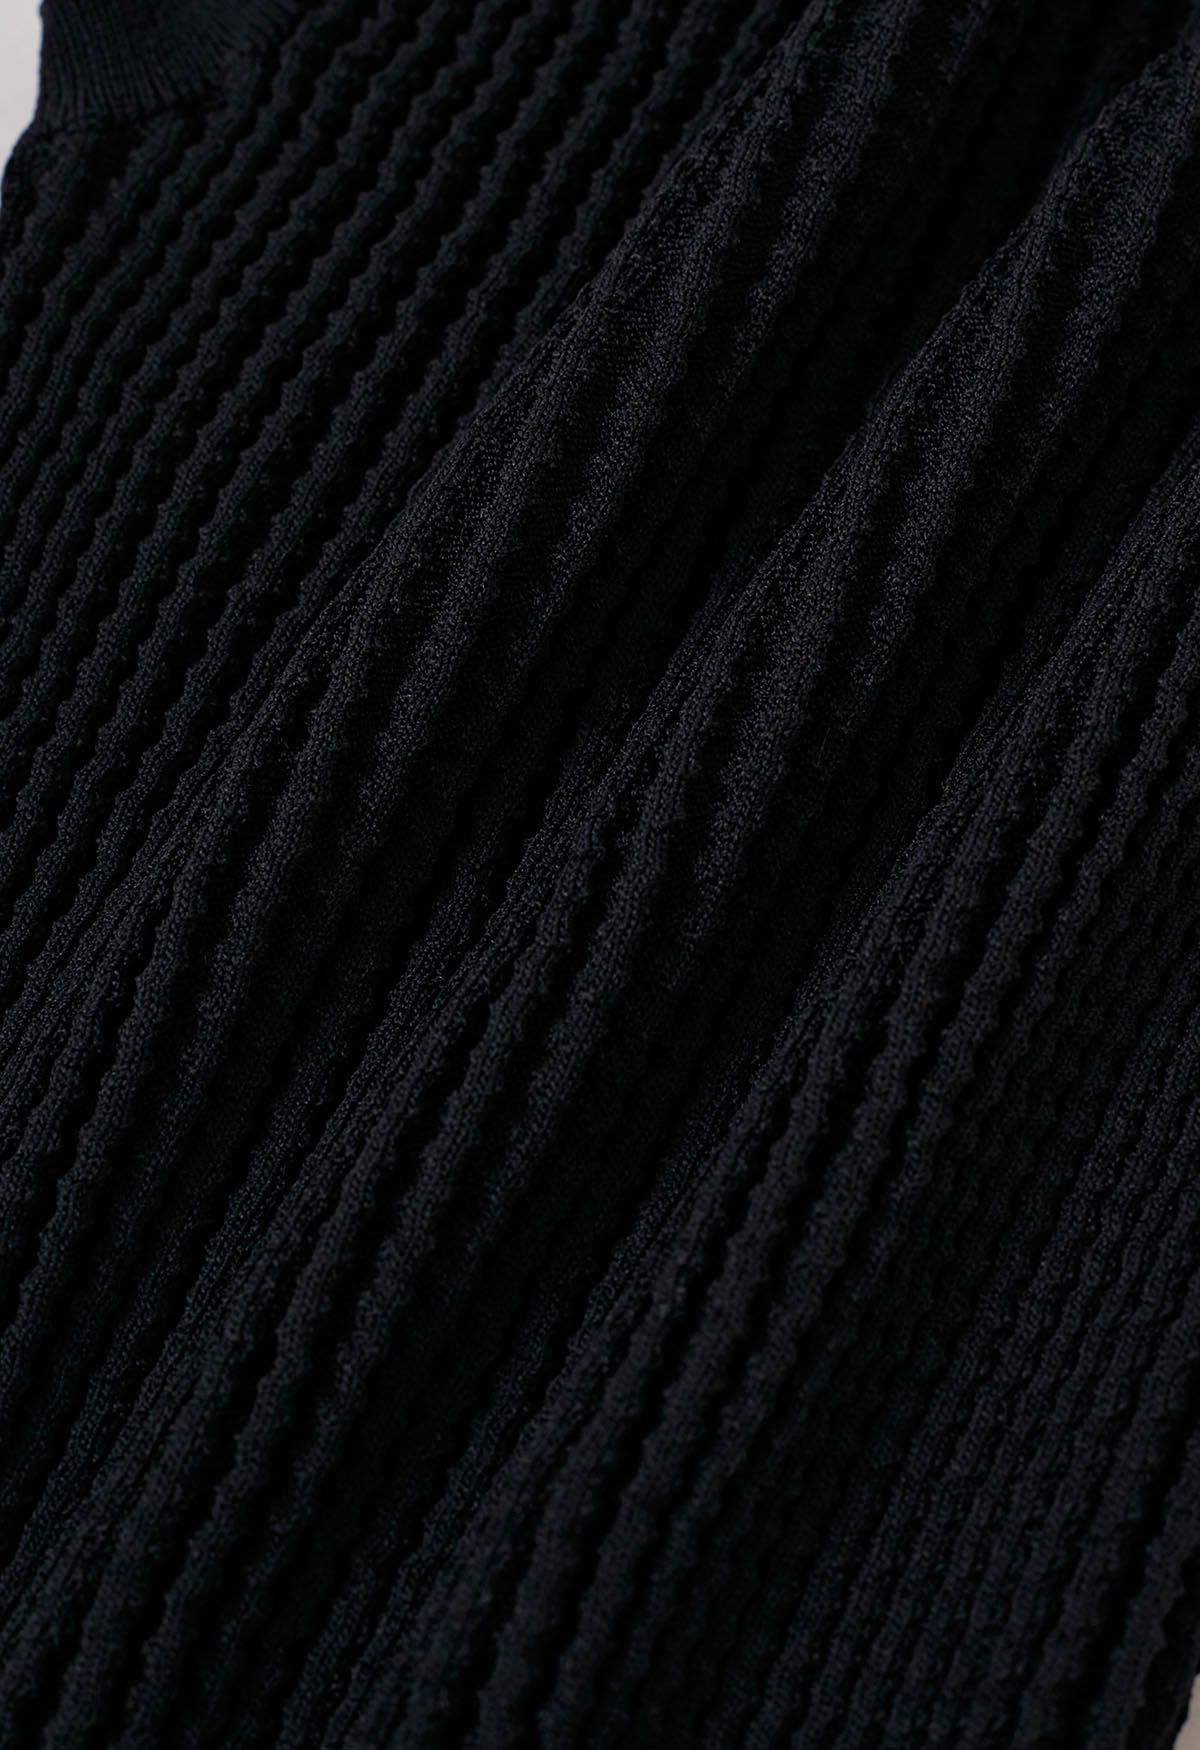 Ribbed Texture Cap Sleeves Top in Black